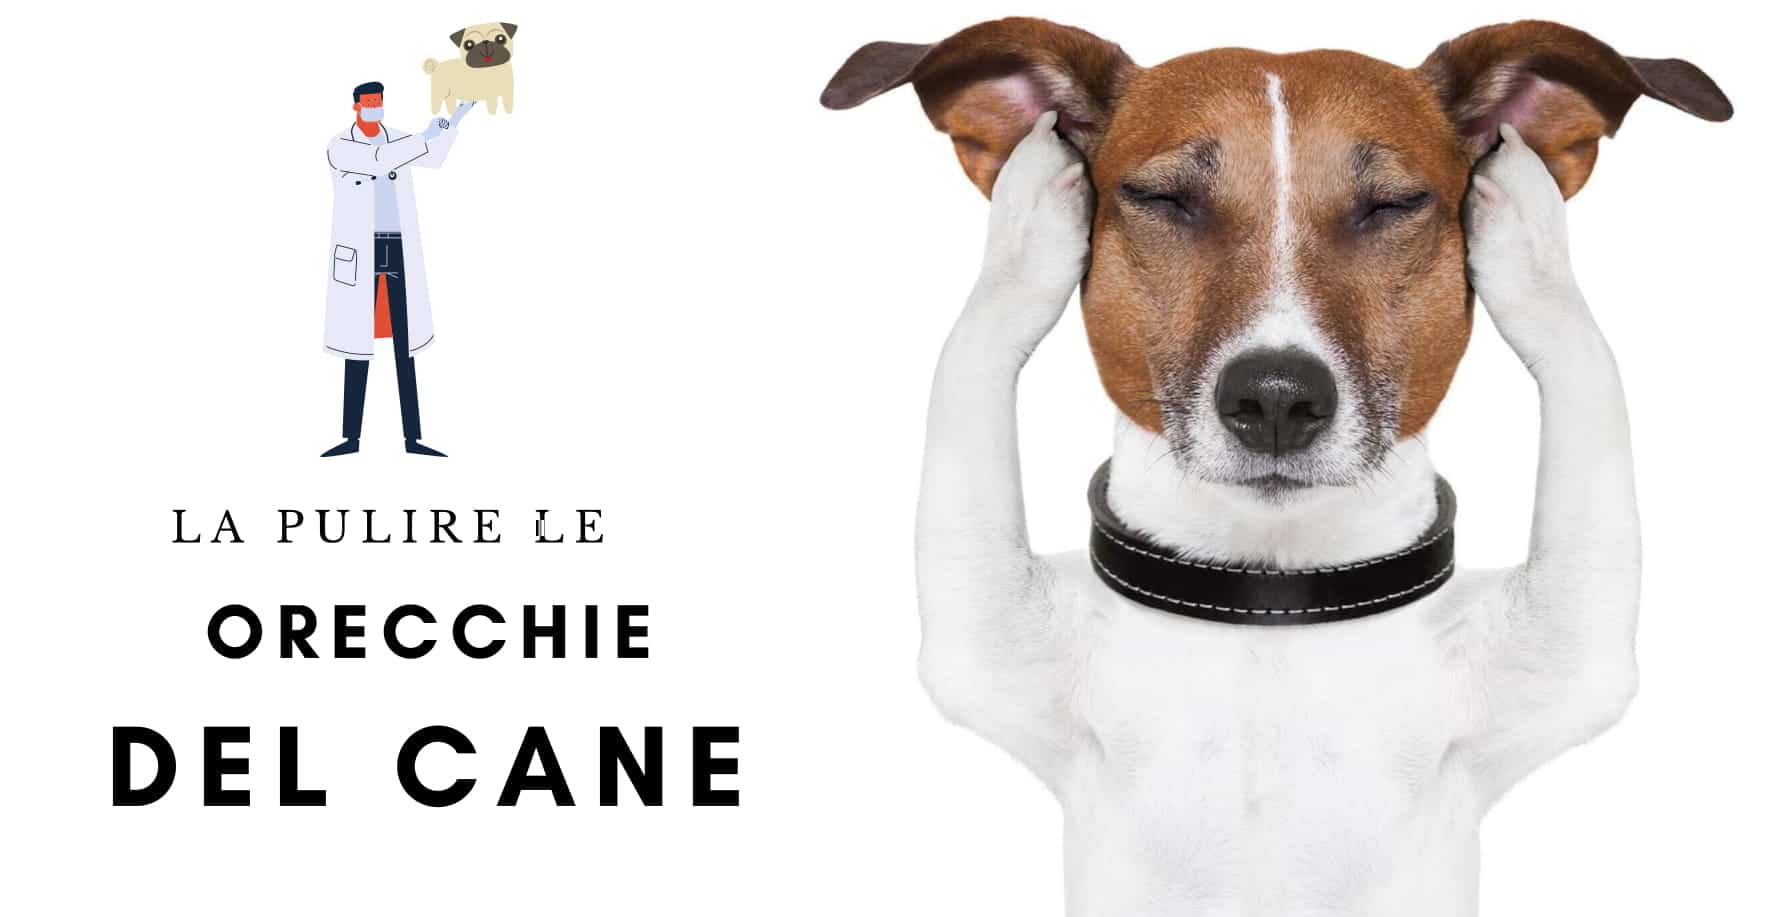 4 Migliori Detergenti Per Orecchie Per Cani: Da Soluzioni Liquide In Salviettine!